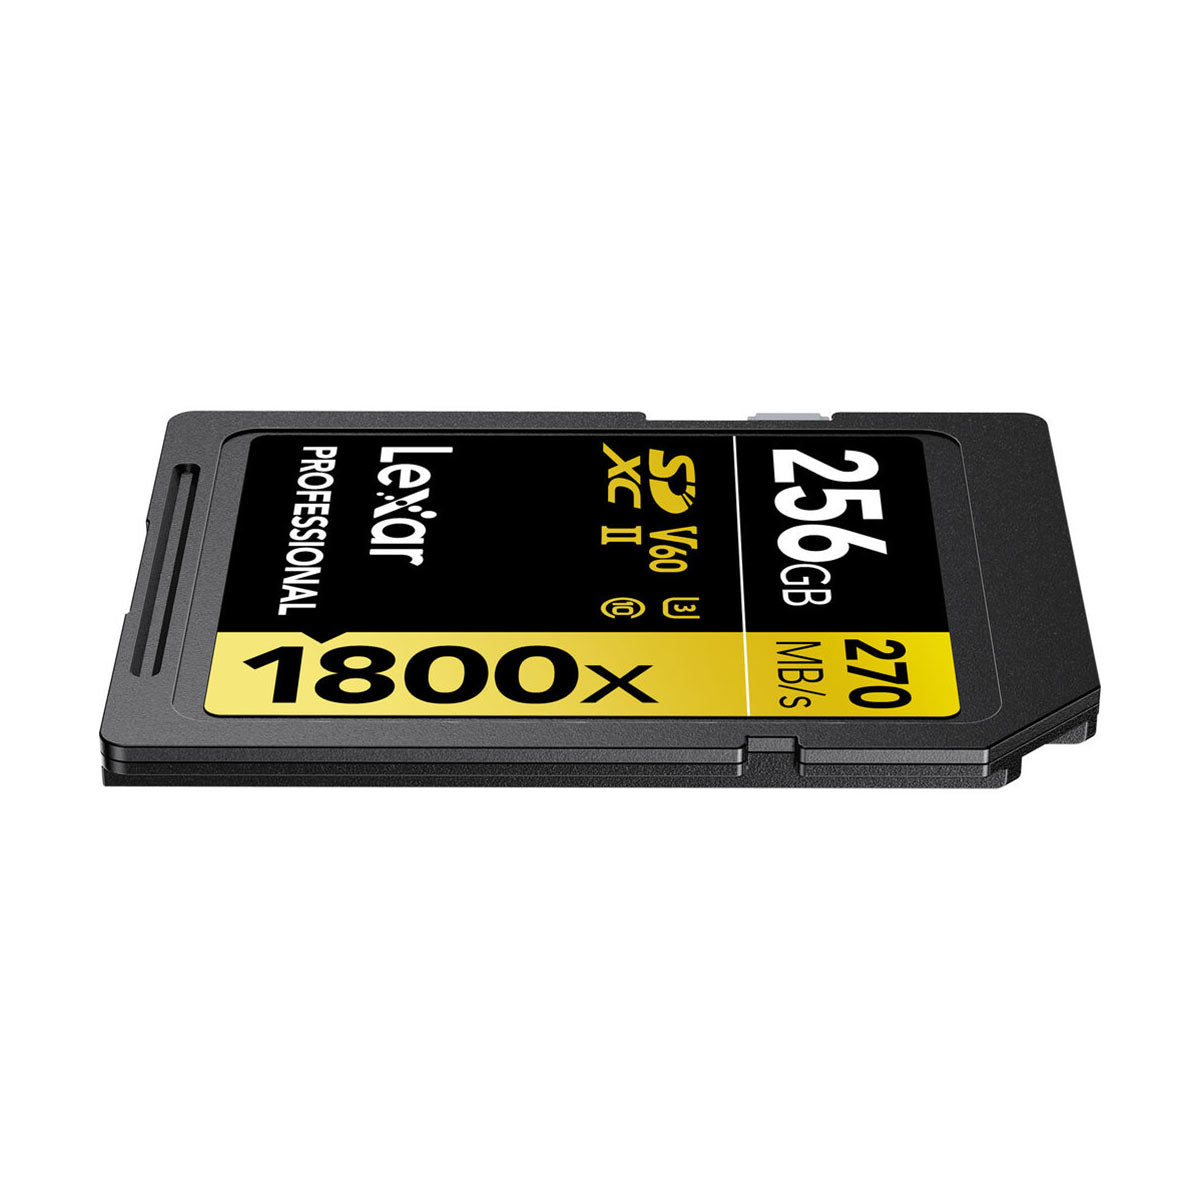 Lexar 256GB Professional 1800x UHS-II SDXC (V60) Memory Card